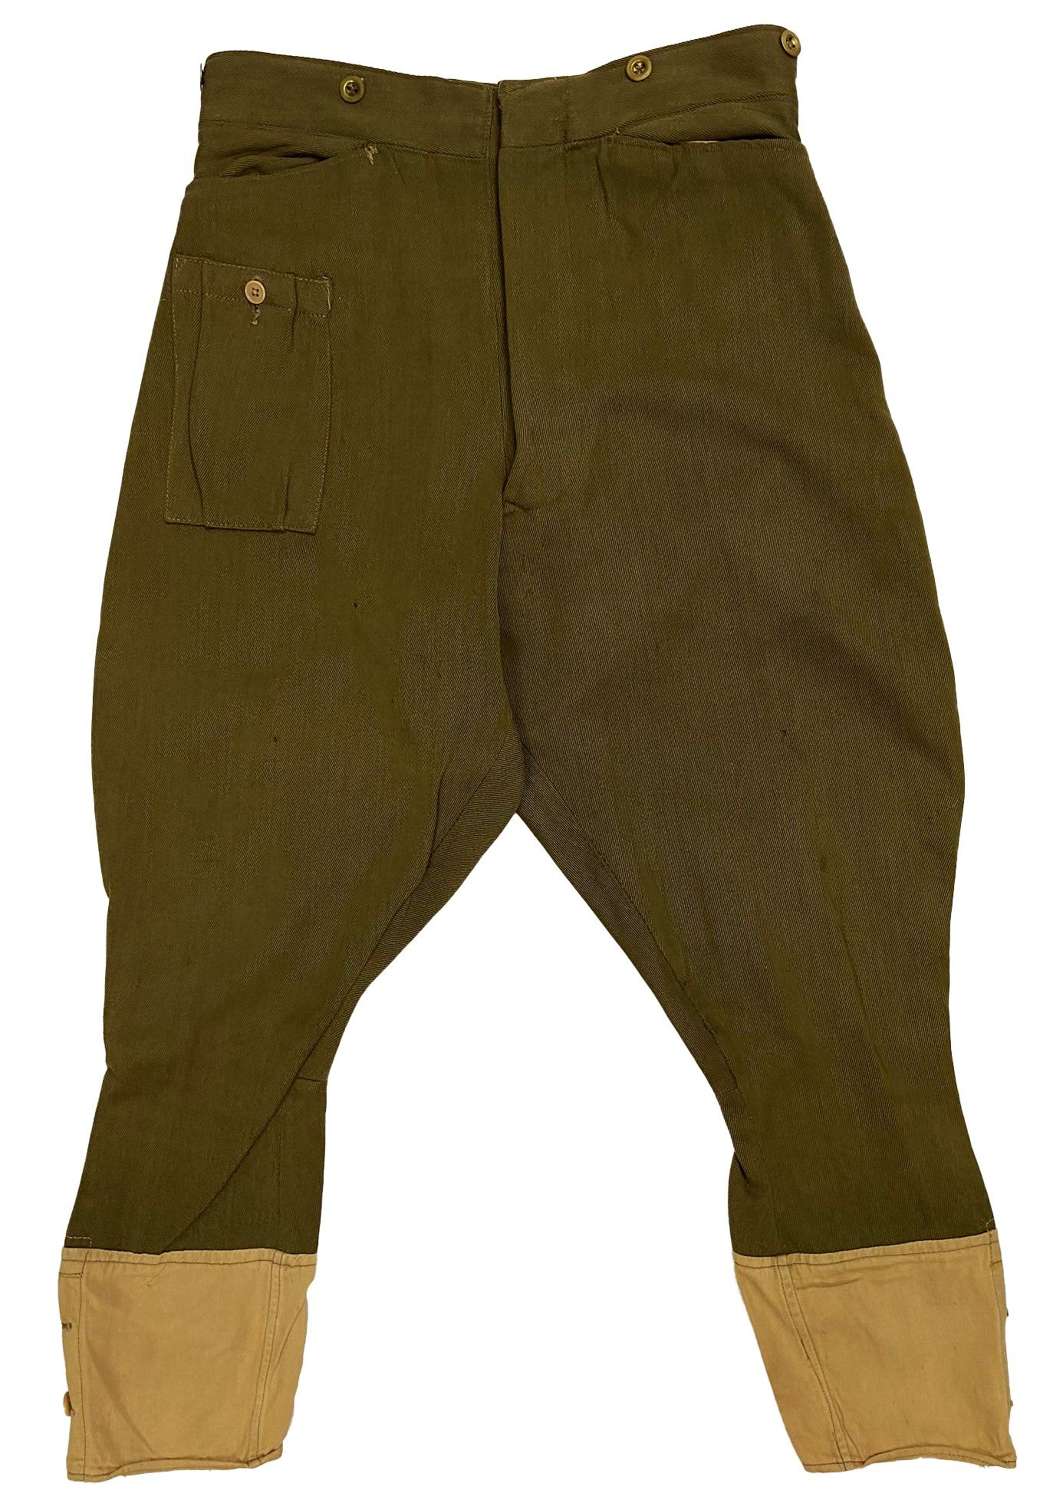 Original 1941 Dated British Army Dispatch Riders Breeches - Size 13